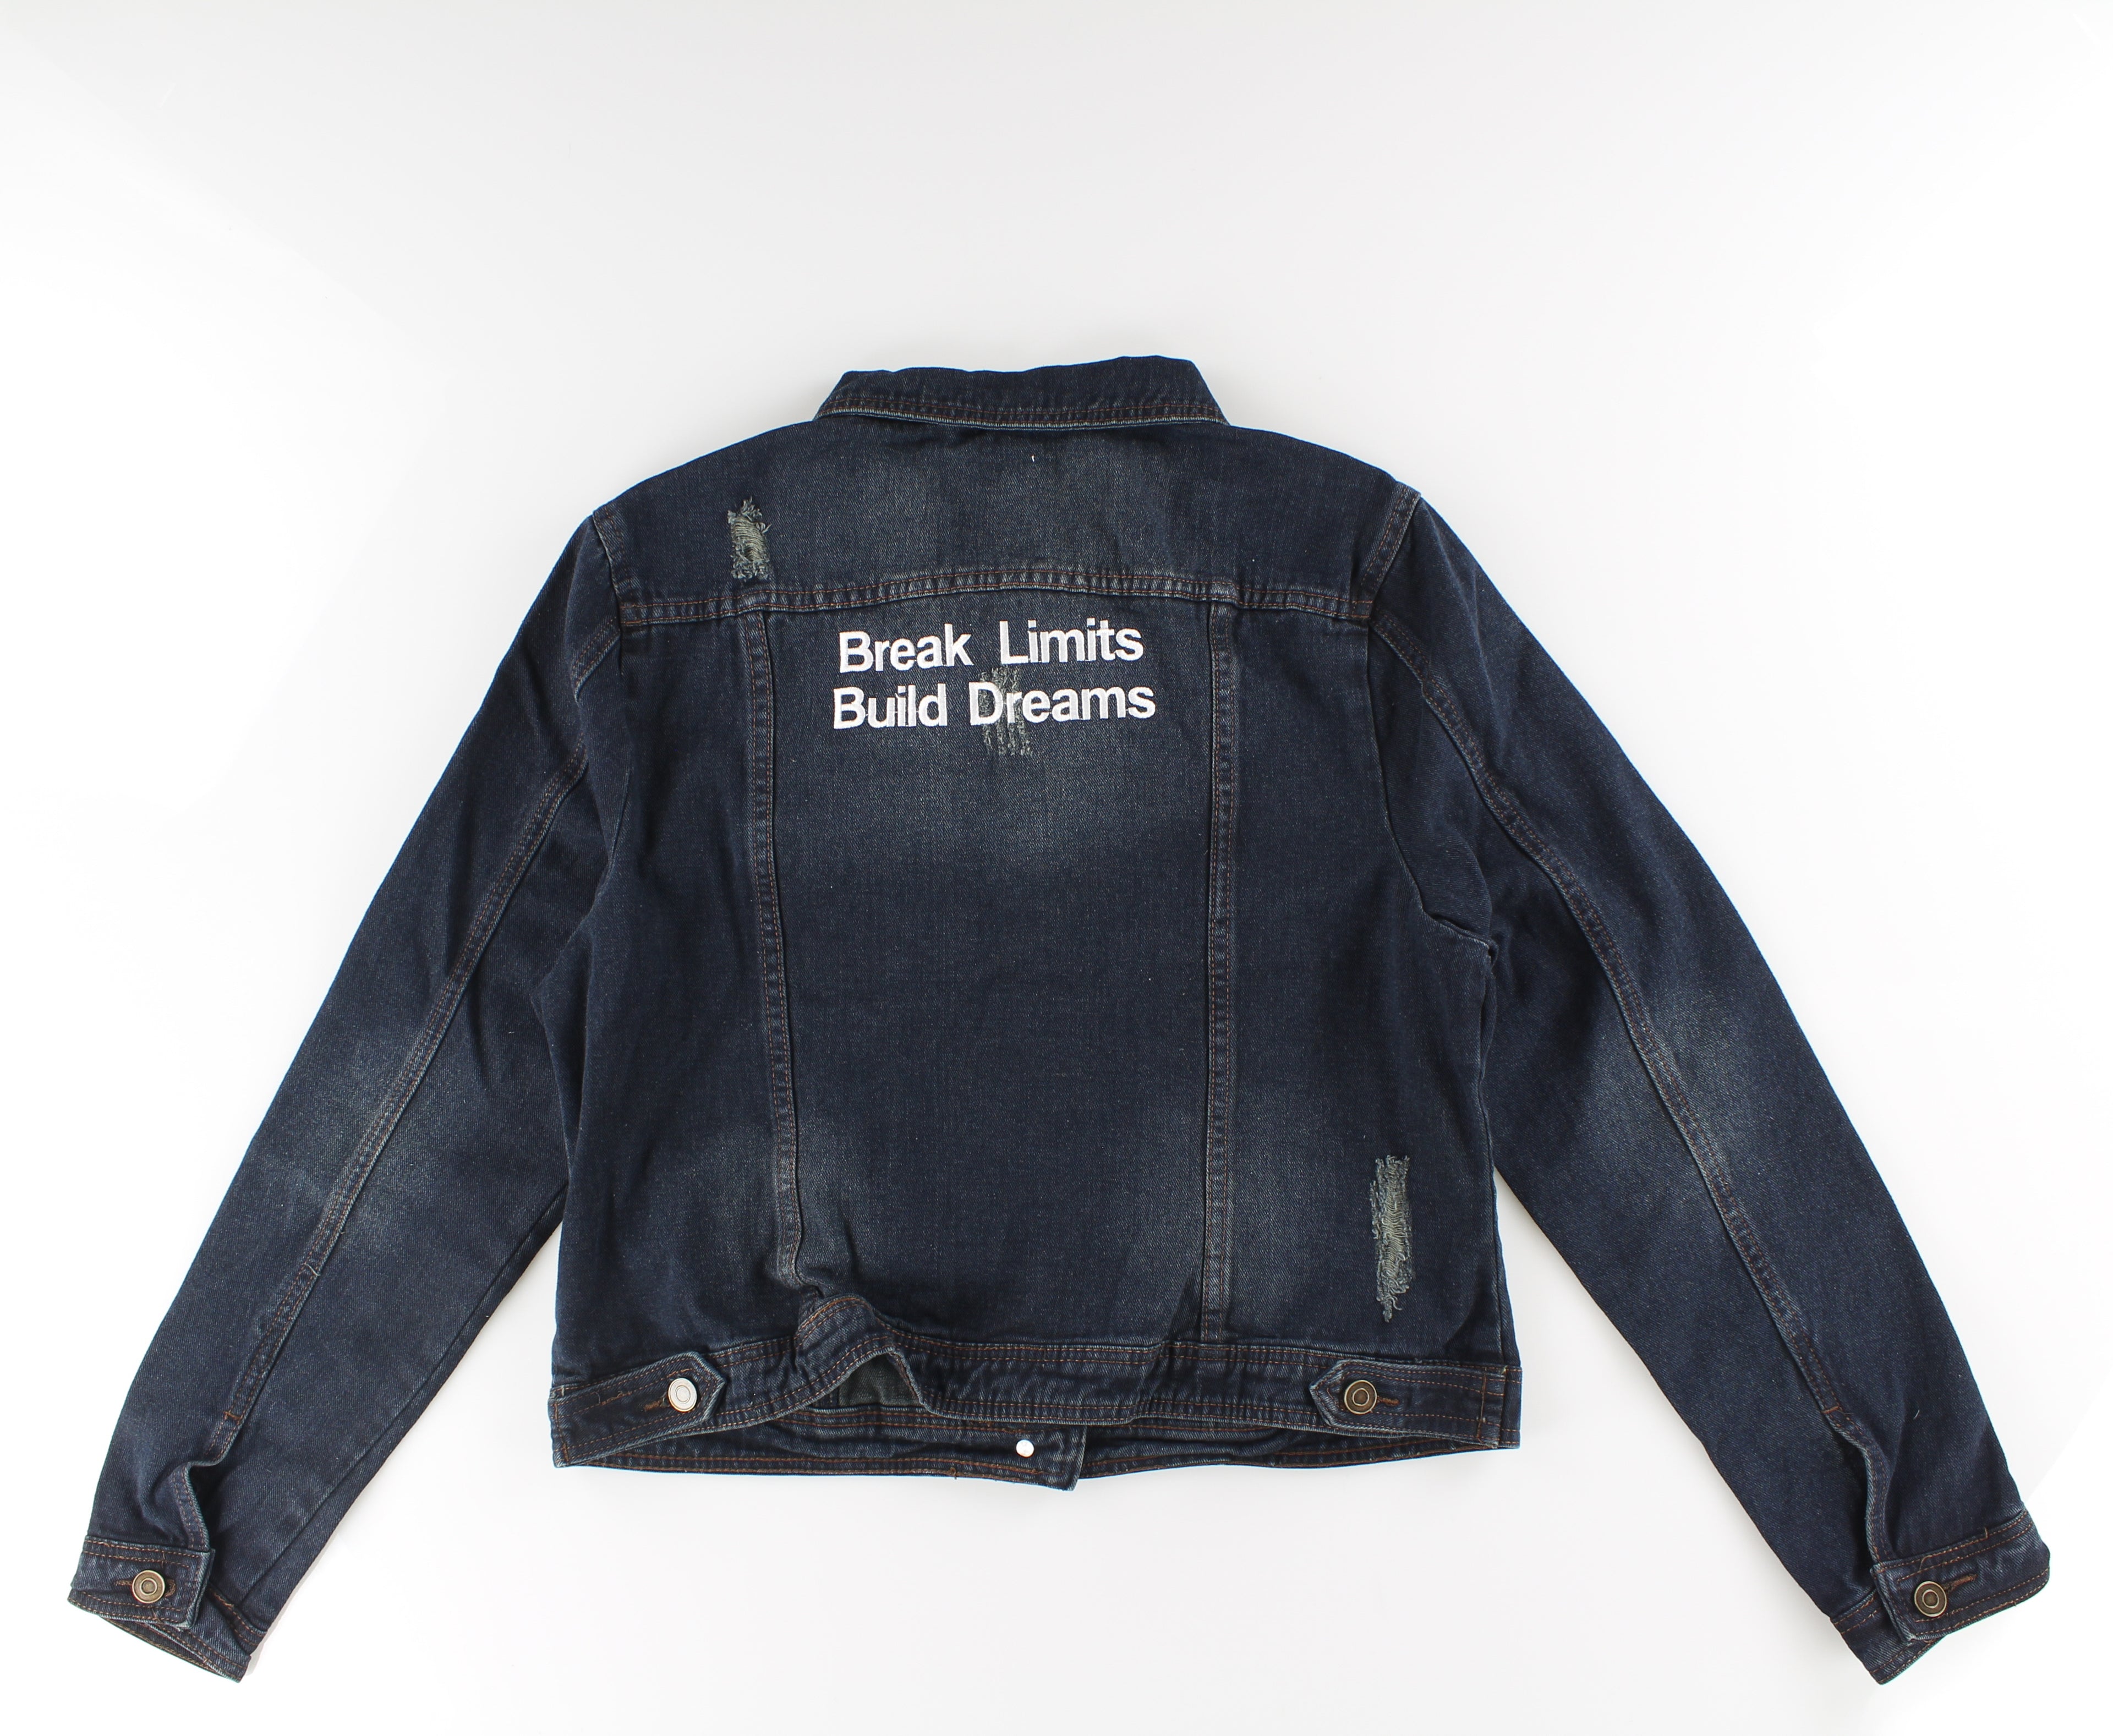 BREAK LIMITS BUILD DREAMS Waist Length Distressed Fitted Dark Denim Jacket